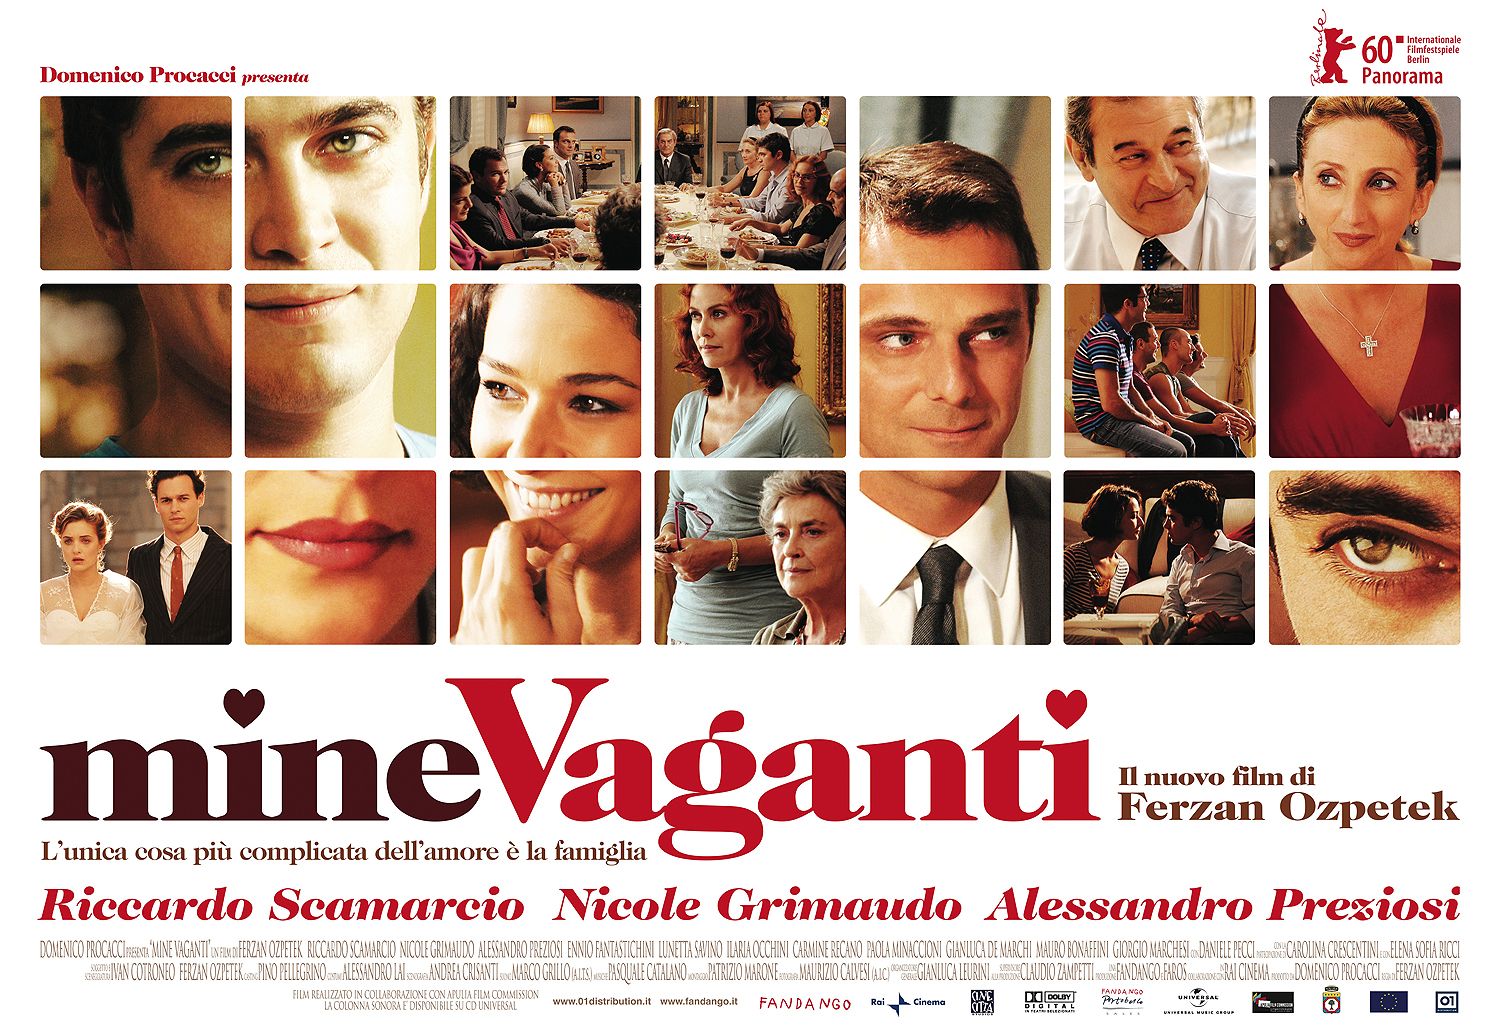 Extra Large Movie Poster Image for Mine vaganti (#5 of 6)